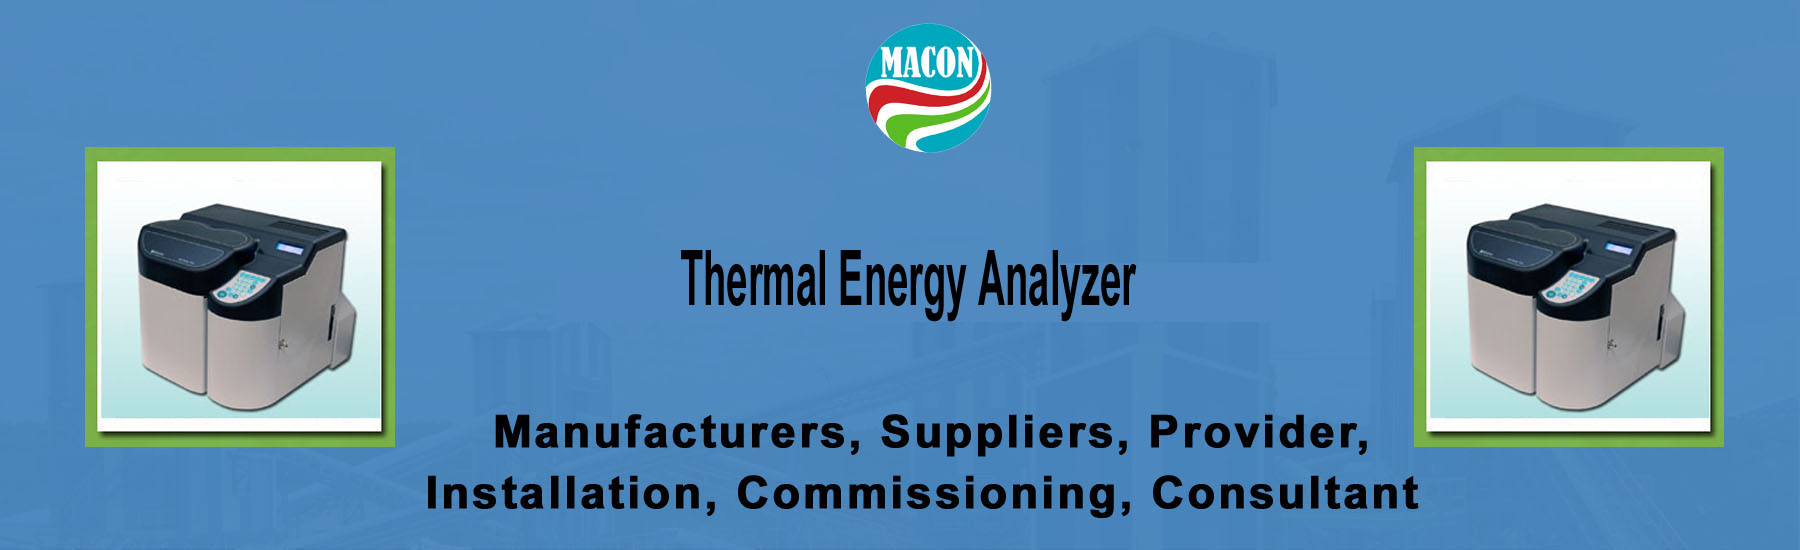 Thermal Energy Analyzer